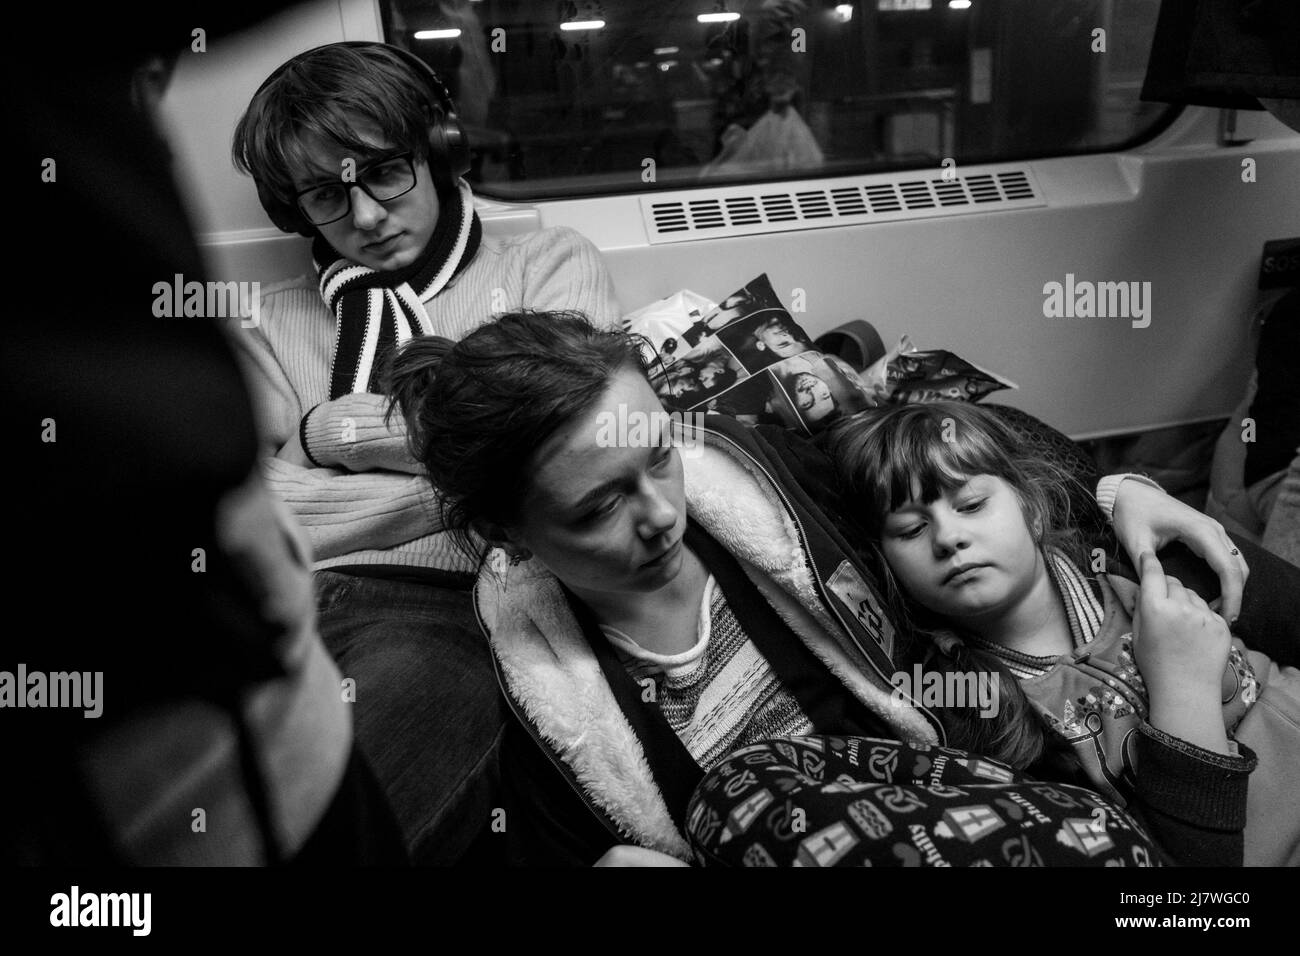 Michael Bunel / Le Pictorium -  Refugees on the Polish-Ukrainian border  -  7/3/2022  -  Poland / Przemysl  -  At the train station in Przemysl, women Stock Photo